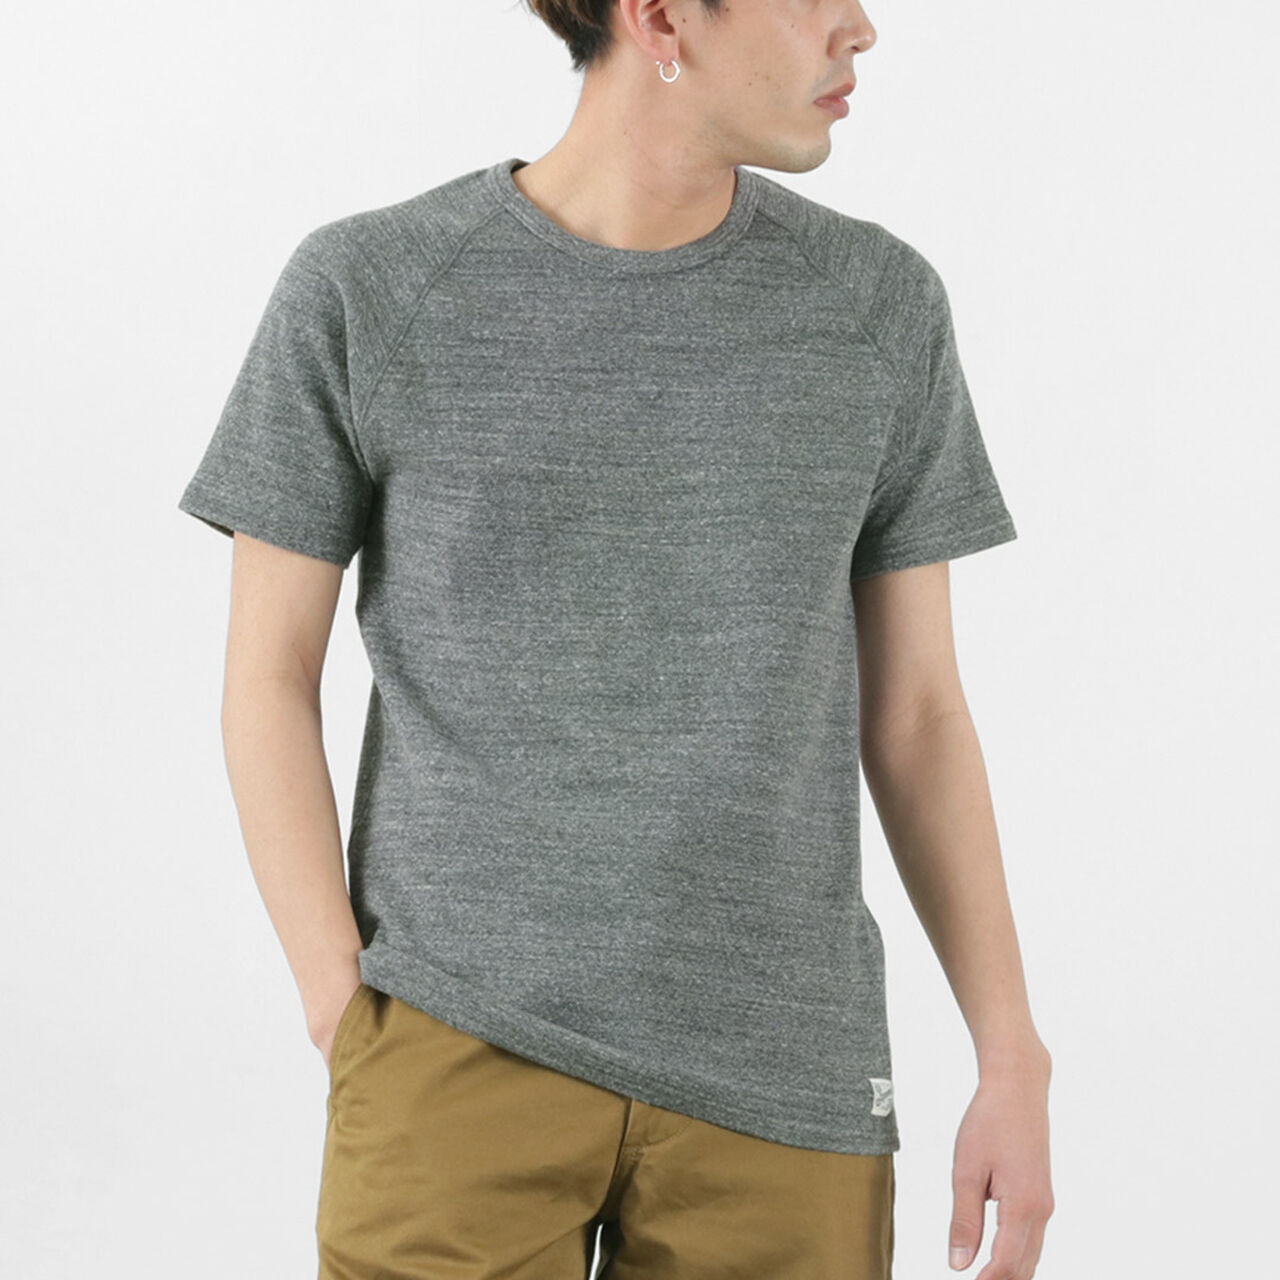 Raffy Spun-fleece Short-Sleeved T-Shirt,Grey, large image number 0